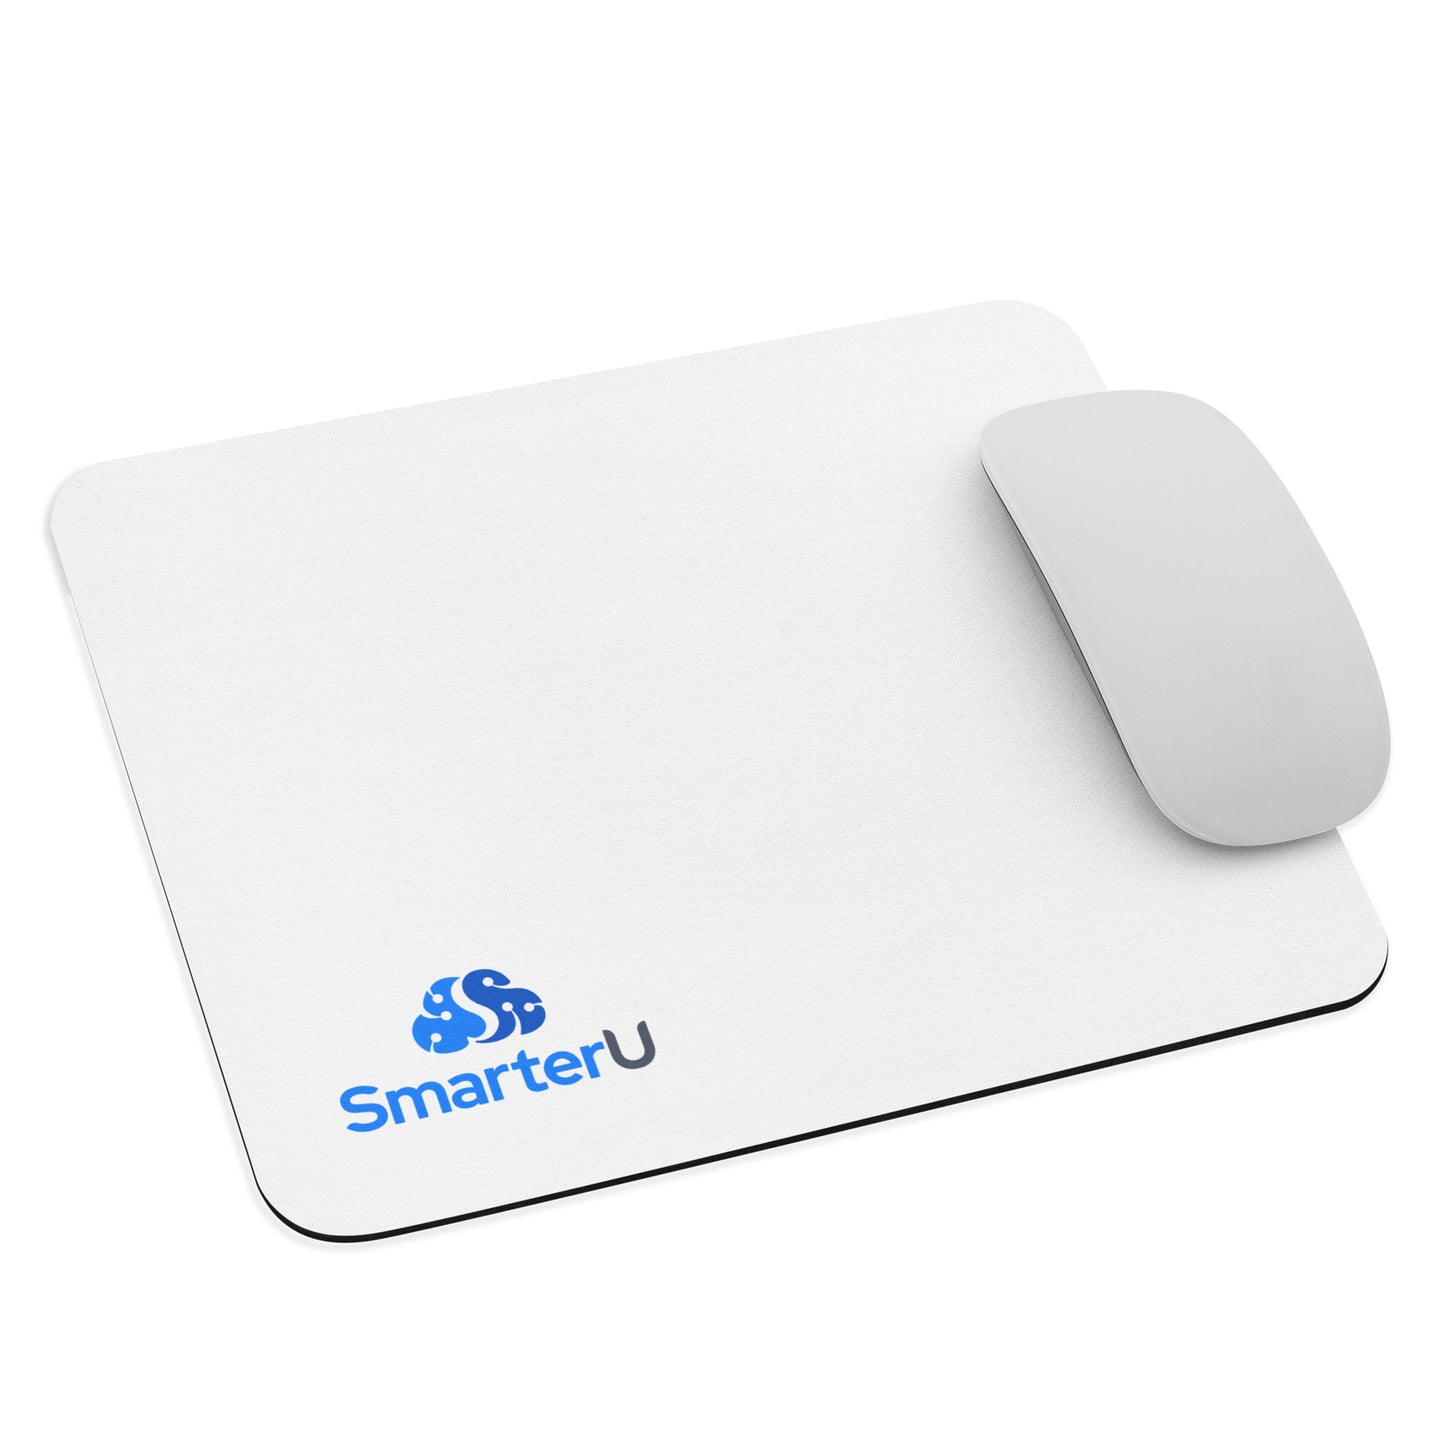 SmarterU Logo Mouse Pad